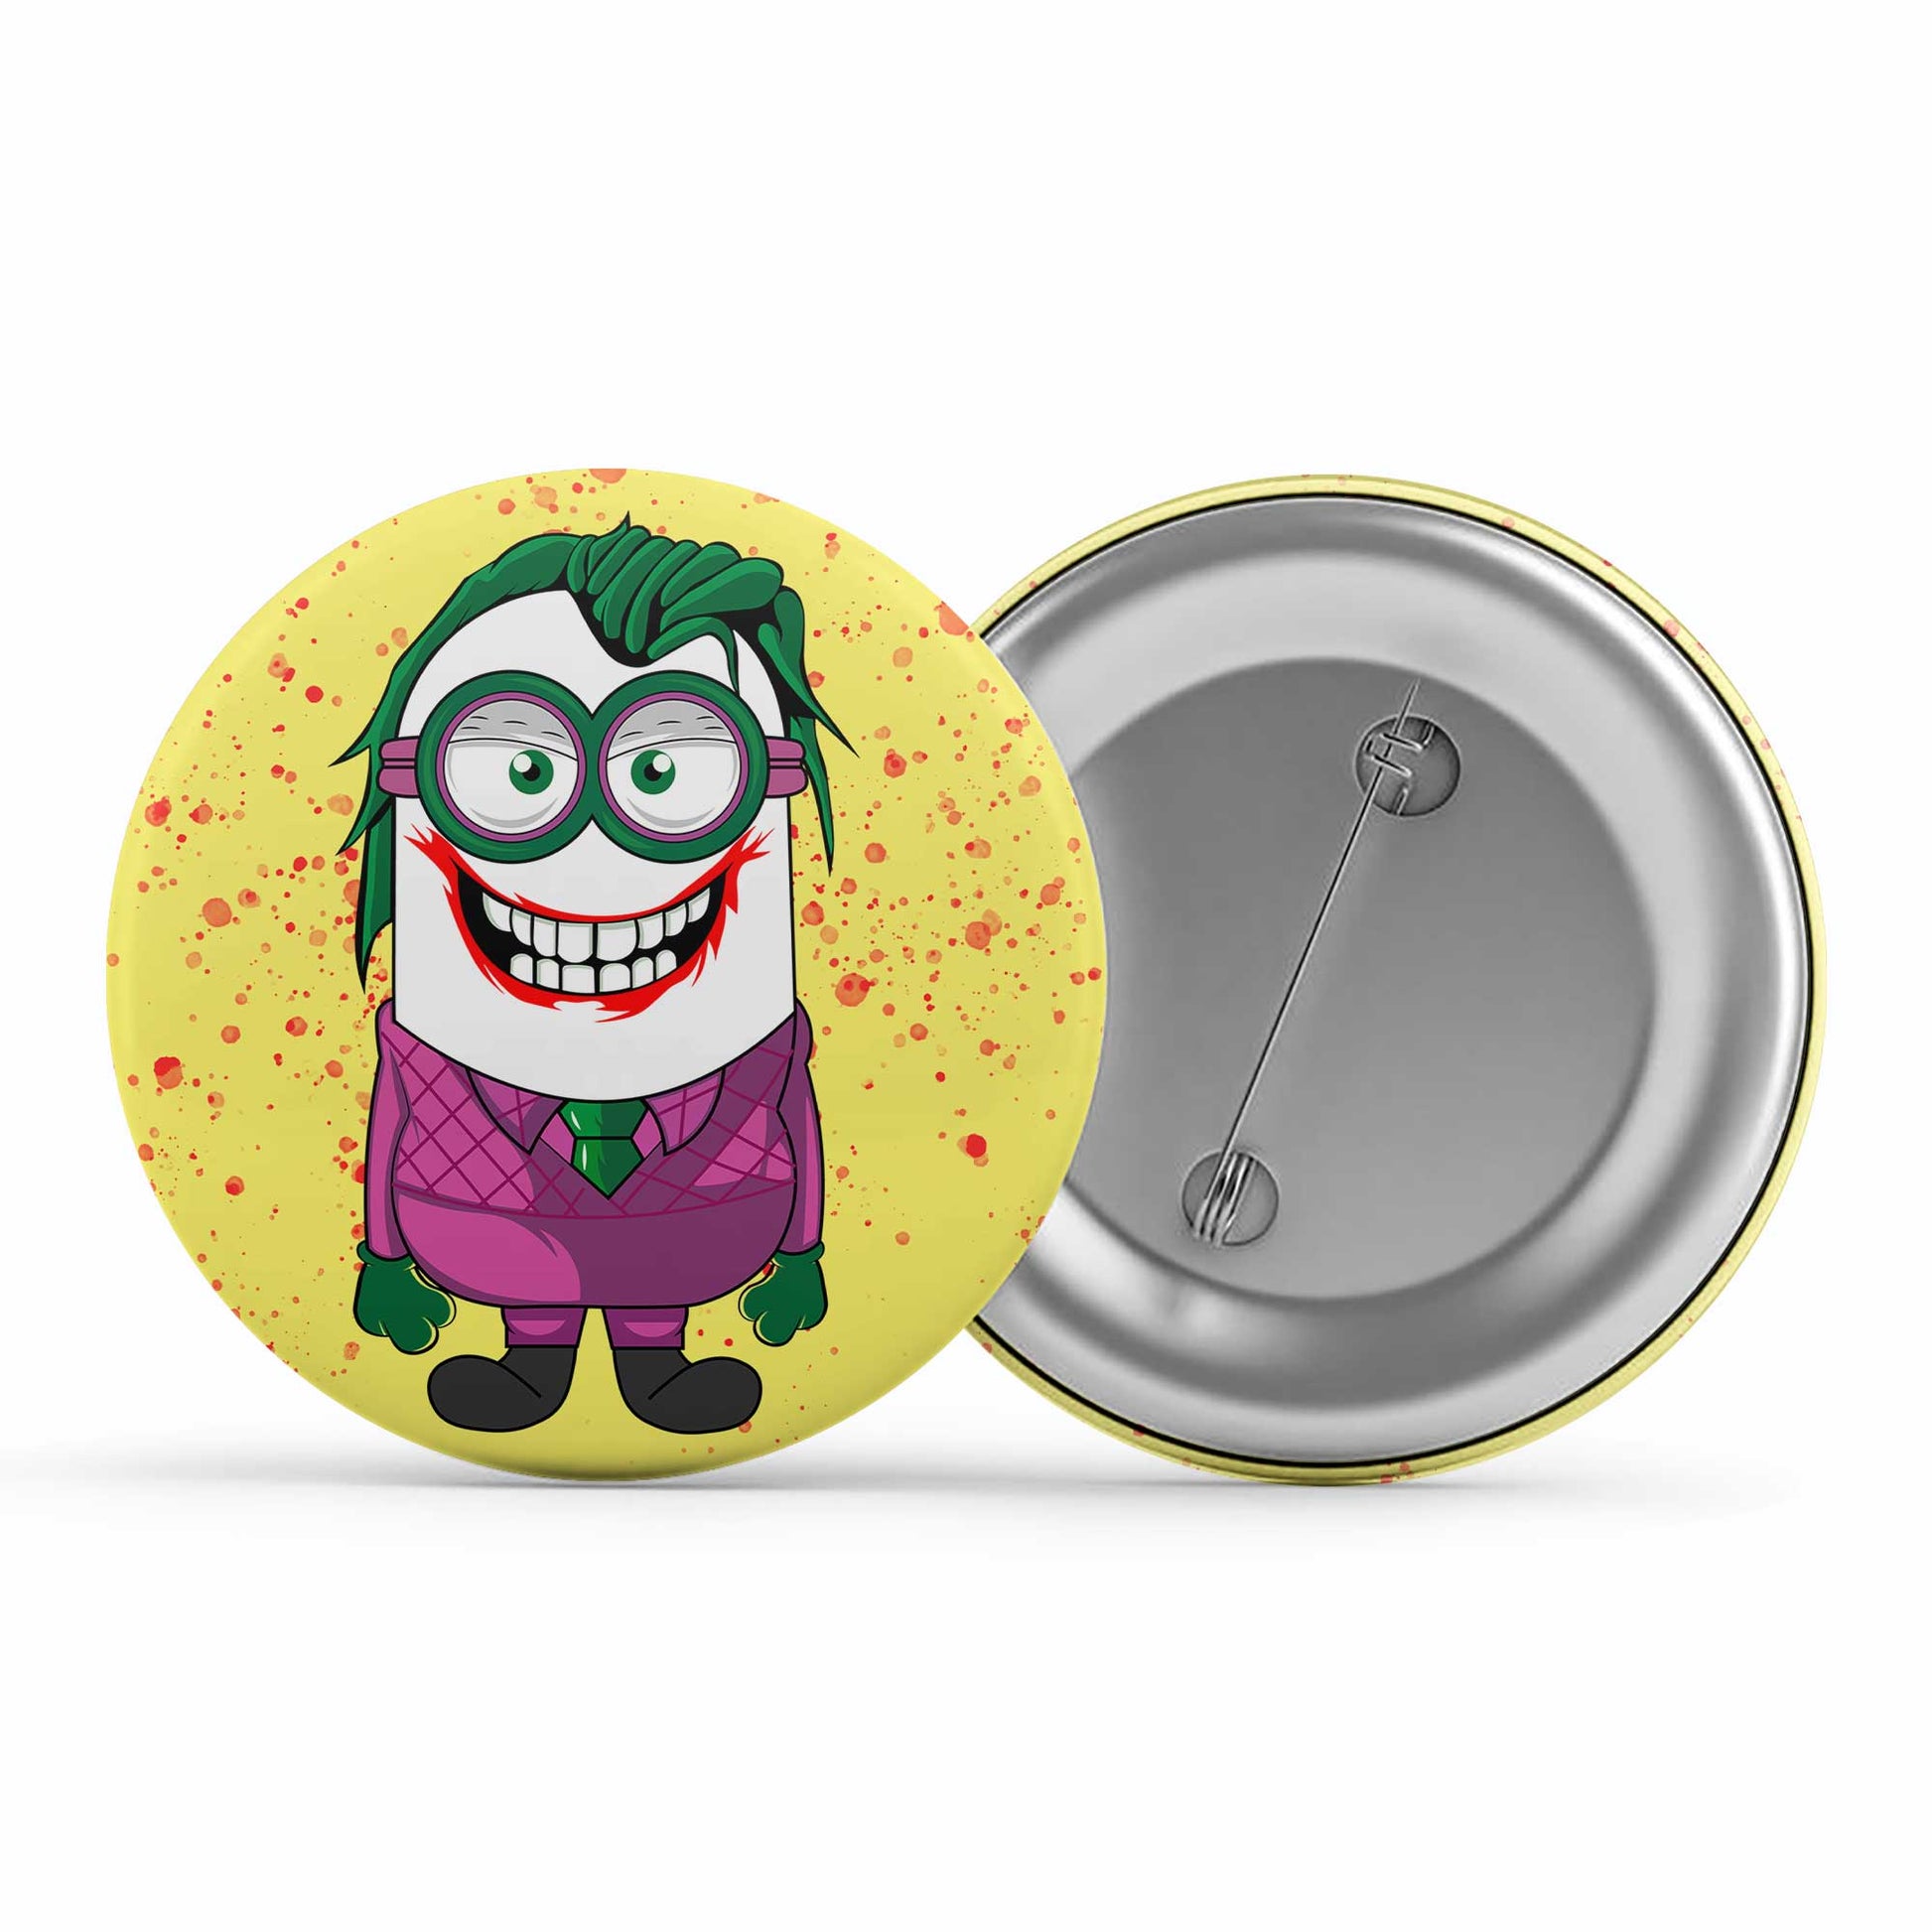 minions joker badge metal pin button the banyan tee tbt pin button lapel pin cartoon character funny quirky cool illustration